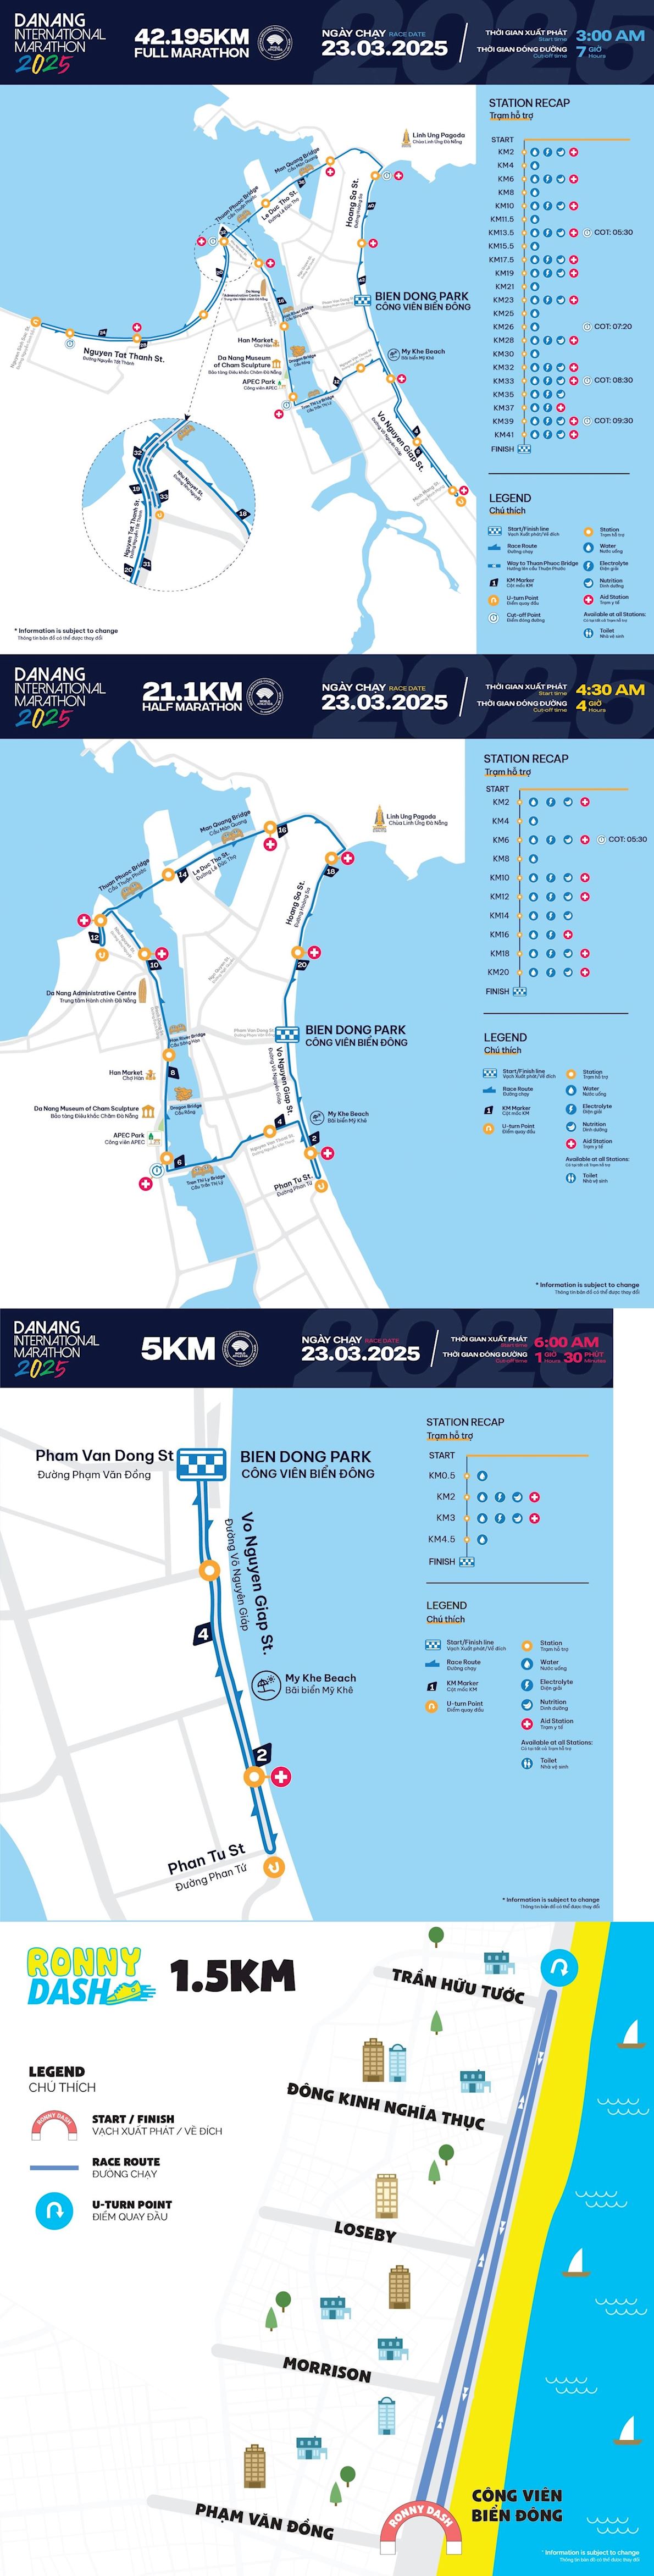 Danang International Marathon Mappa del percorso